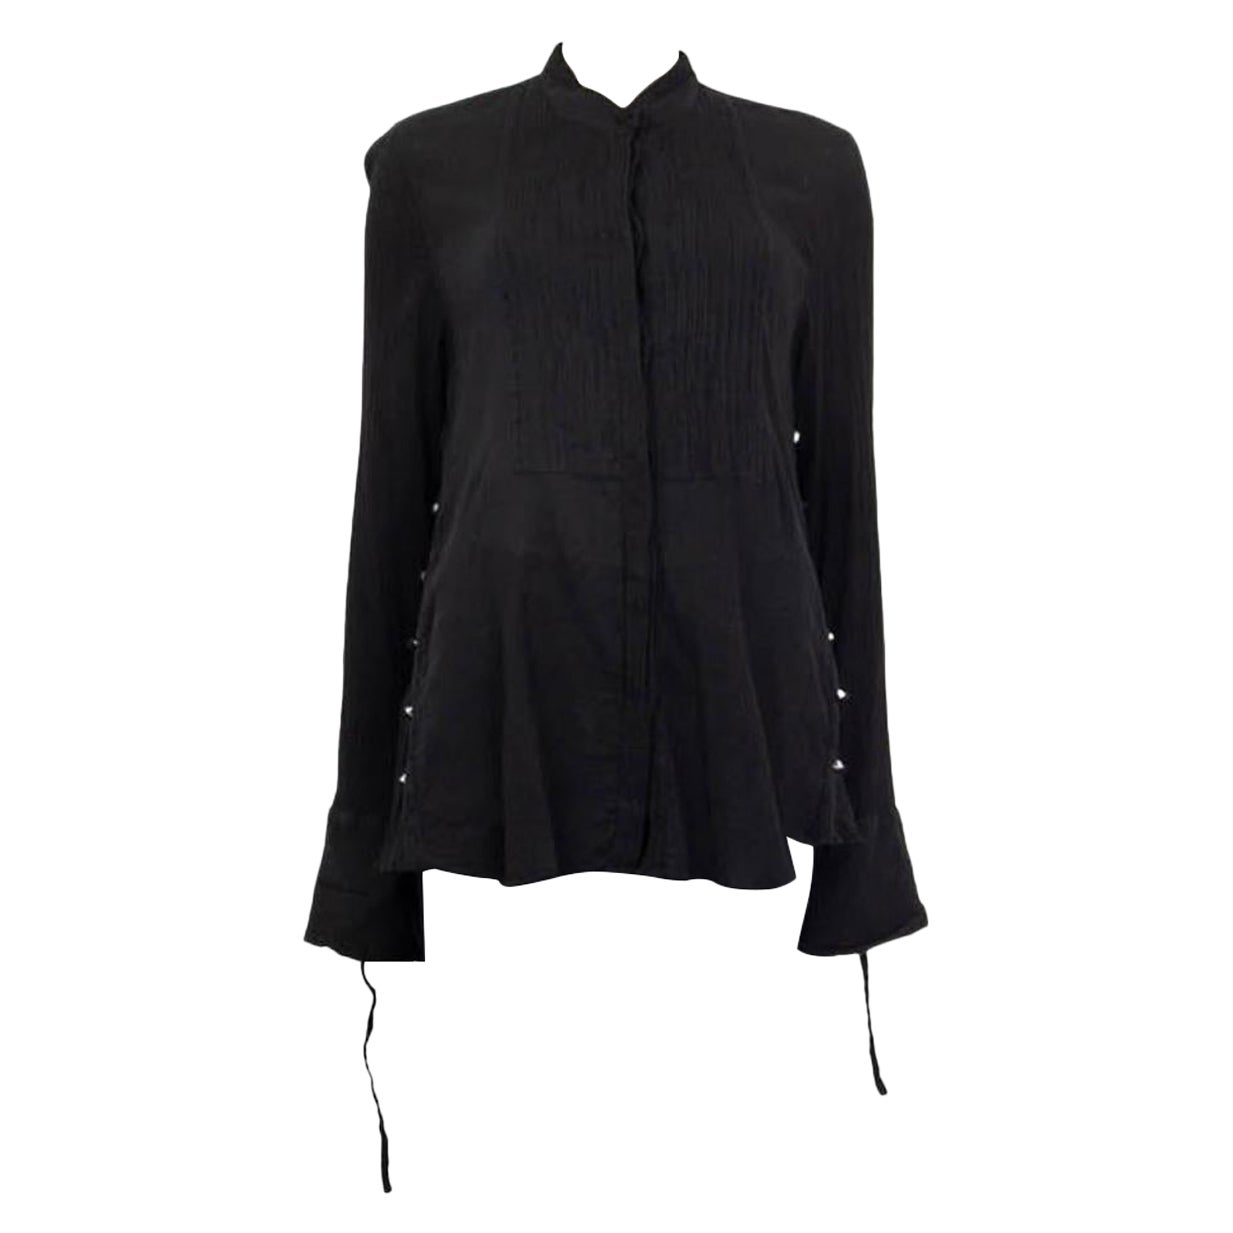 ANN DEMEULEMEESTER black cotton TIE SLEEVE BIB FRONT Shirt Blouse 38 S